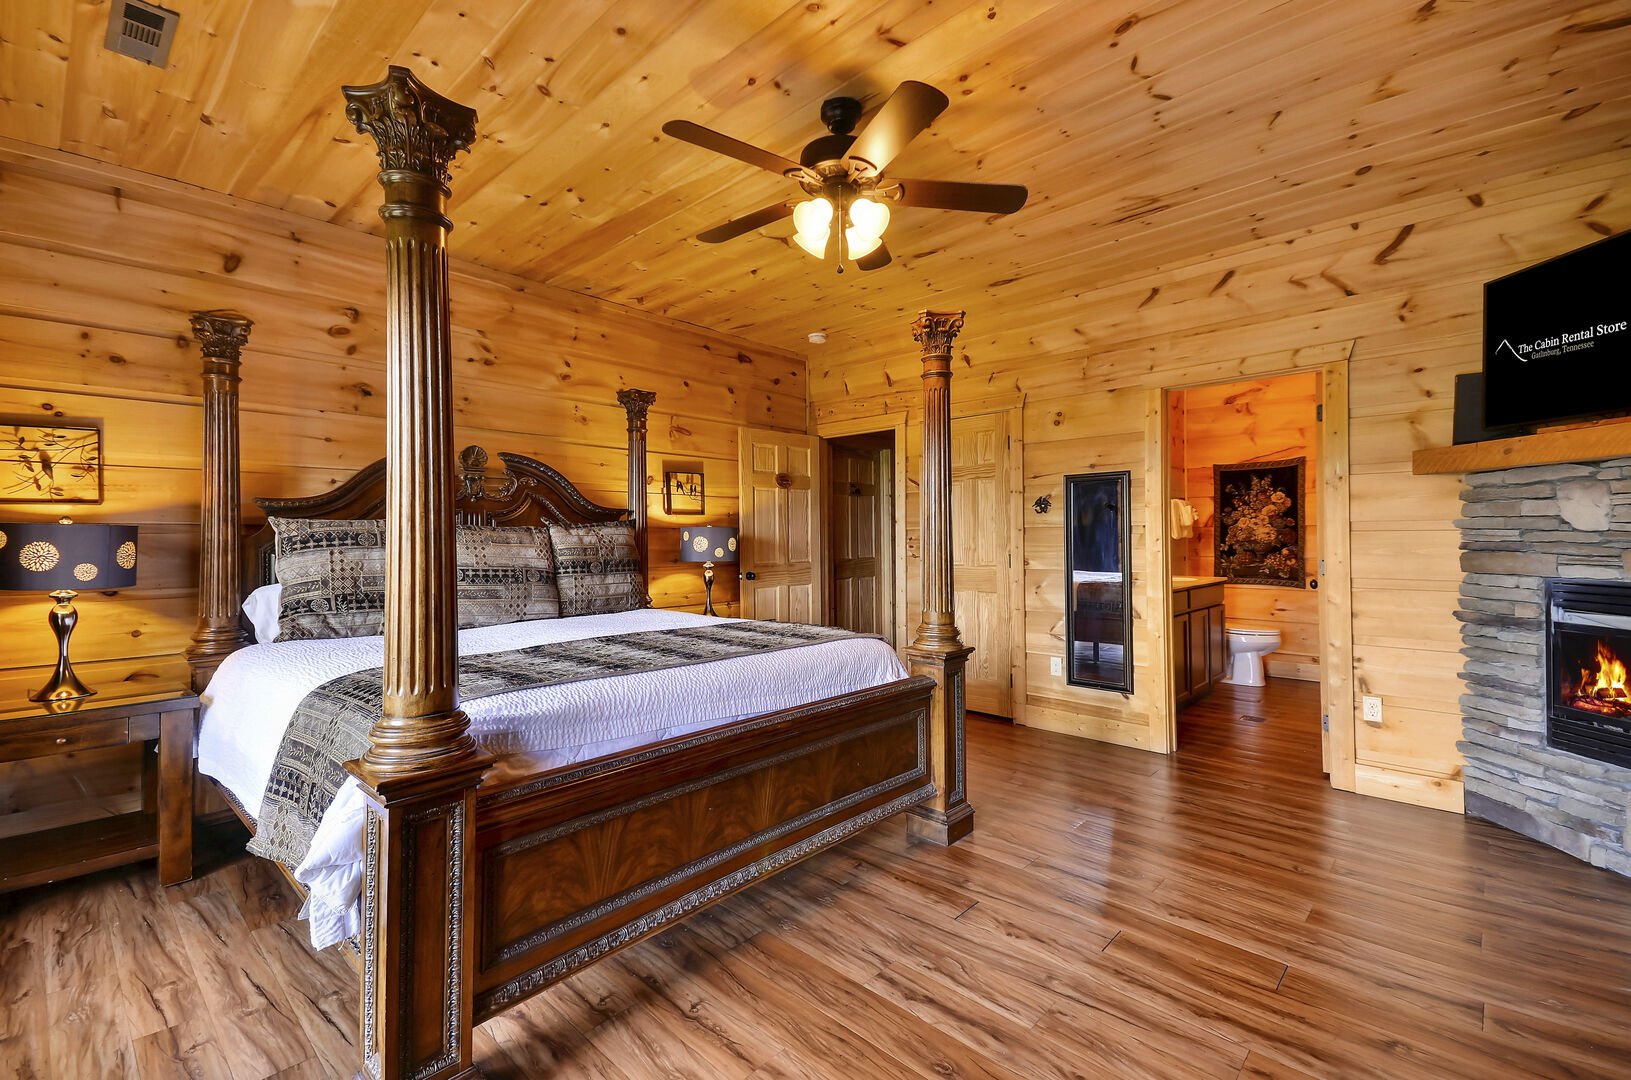 Image of Large Wooden Bed Frame in Bedroom.